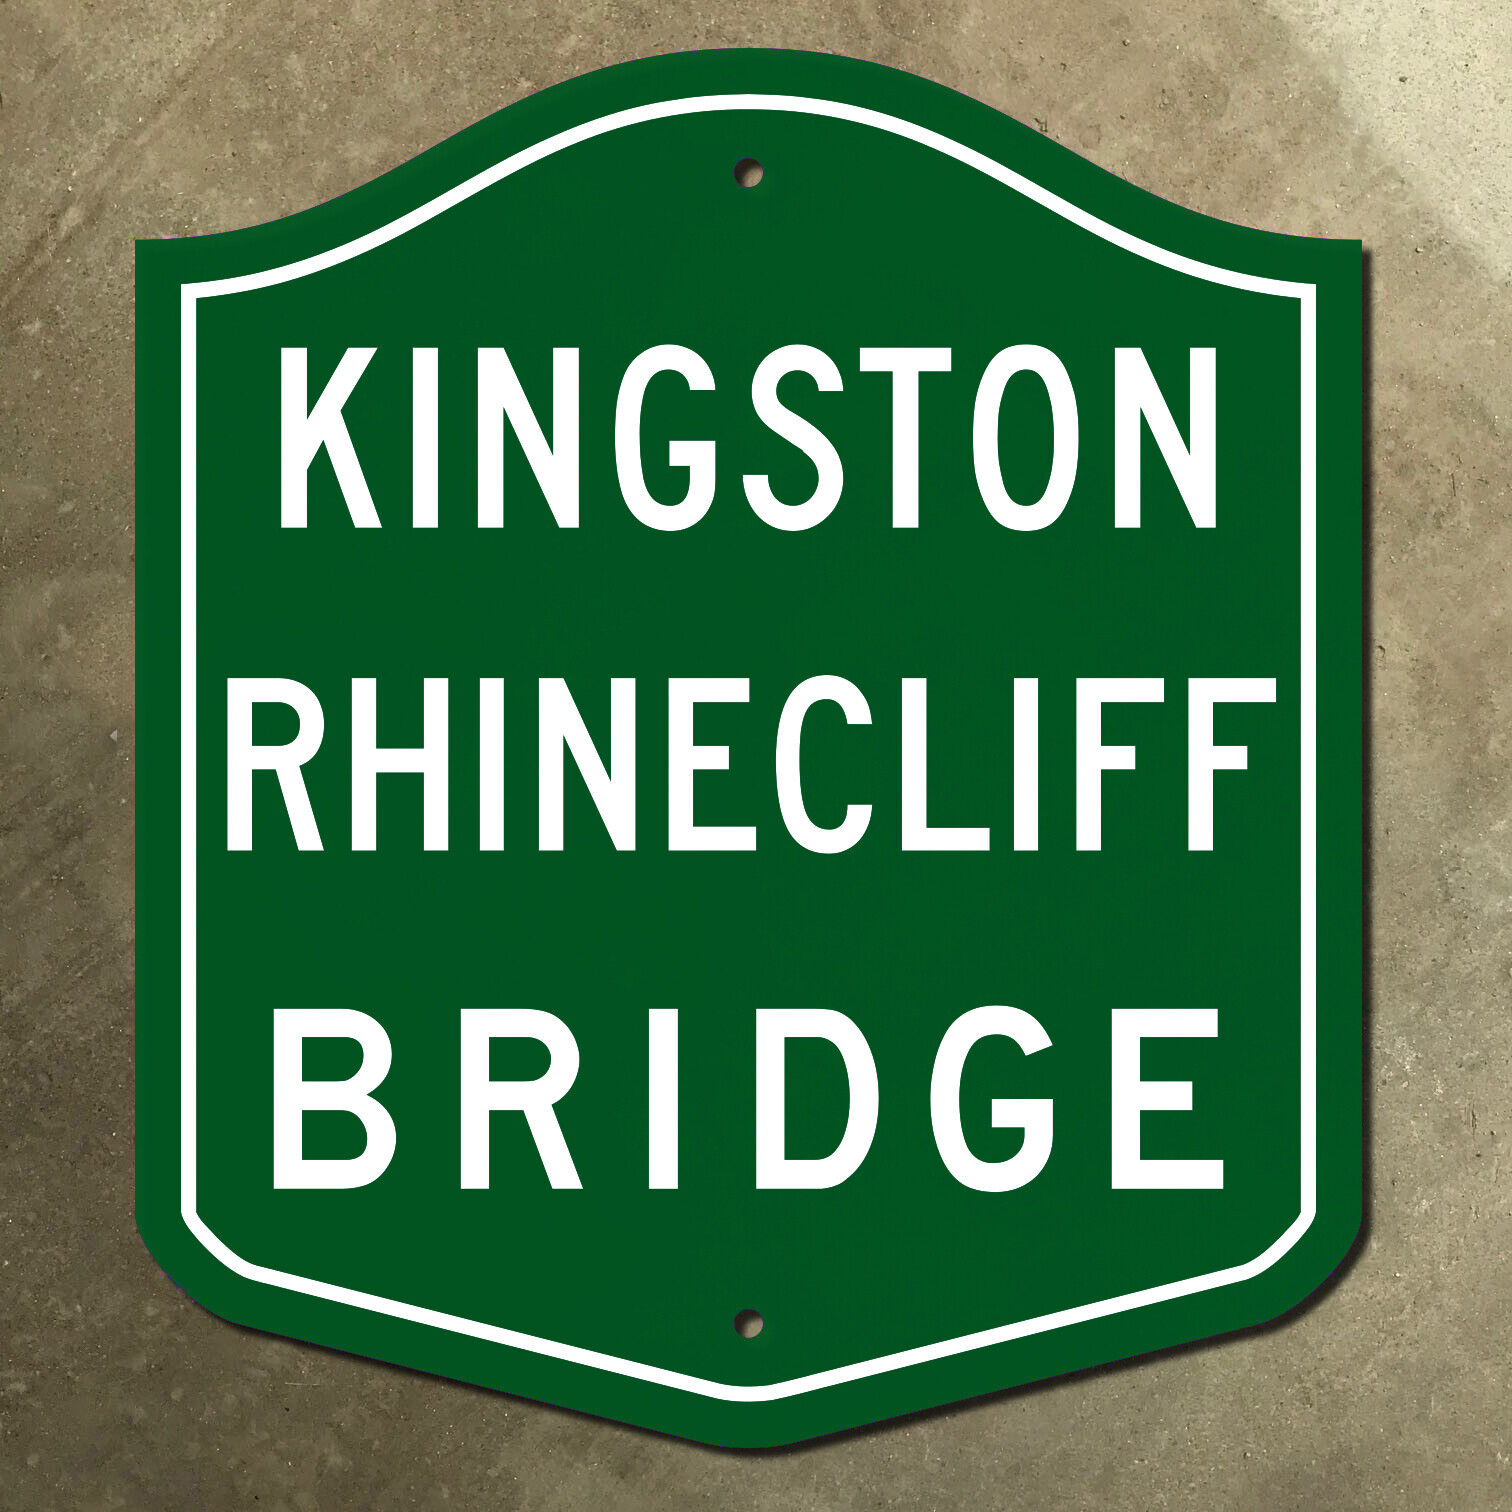 New York Kingston Rhinecliff Bridge highway road sign shield 1965 green 16x18